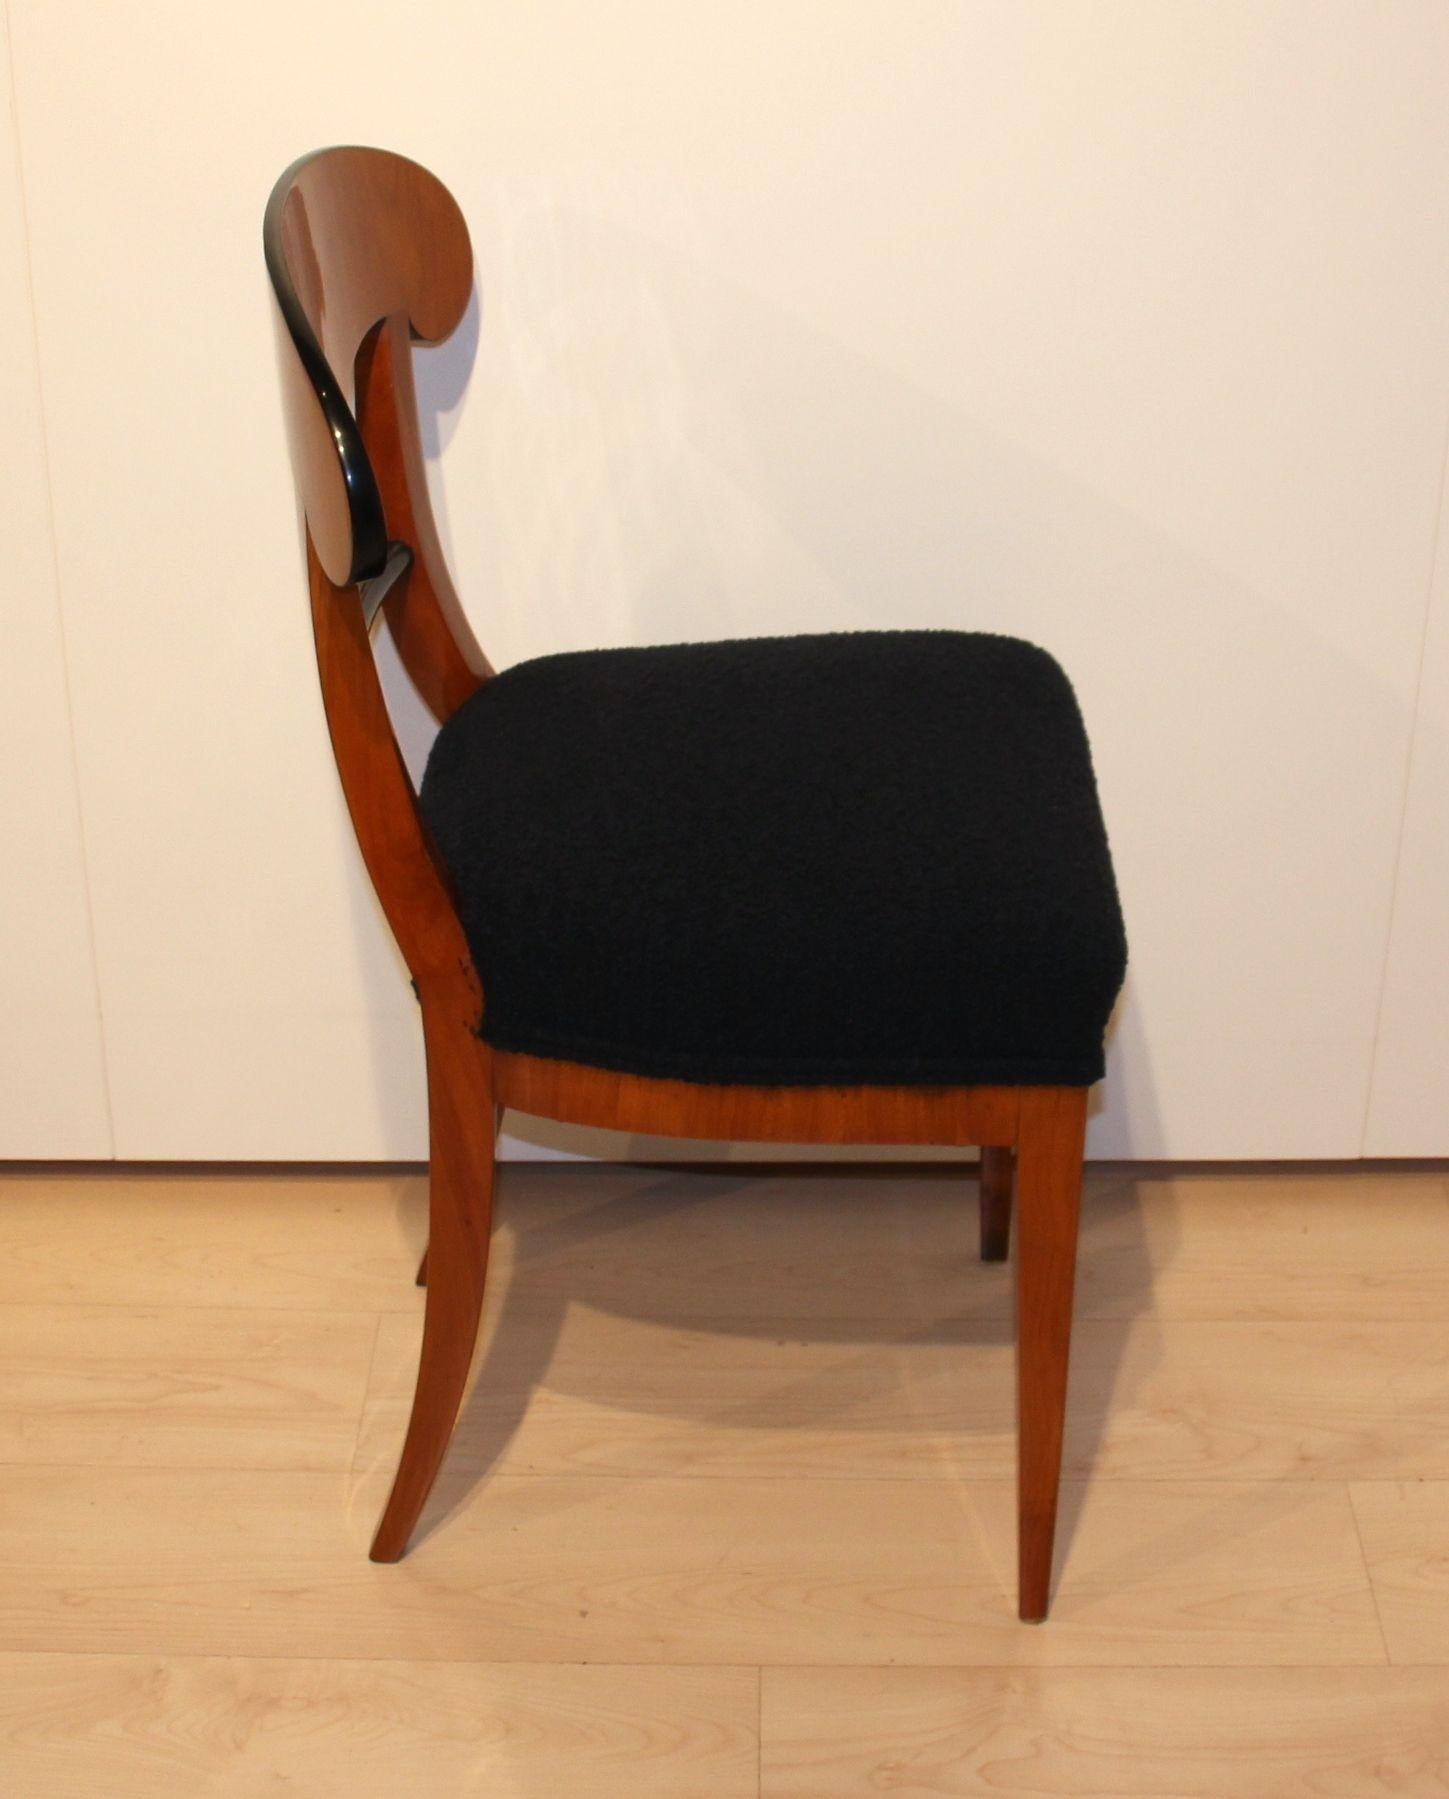 Early 19th Century Biedermeier Shovel Chair, Cherry Veneer, South Germany circa 1820 For Sale